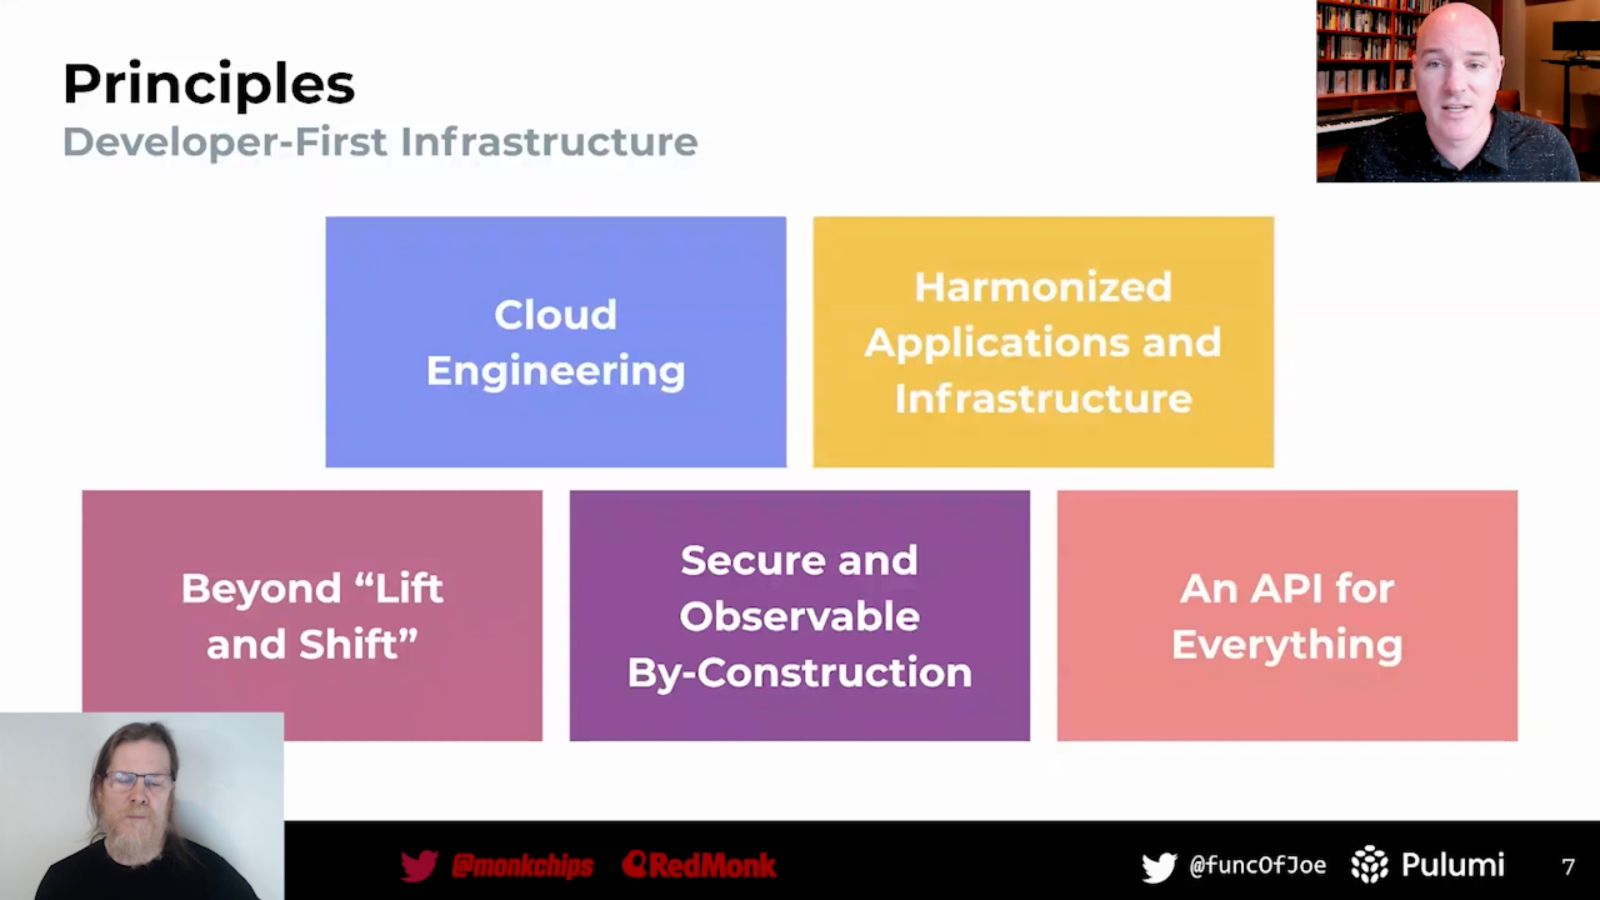 Principles of developer-first infrastructure